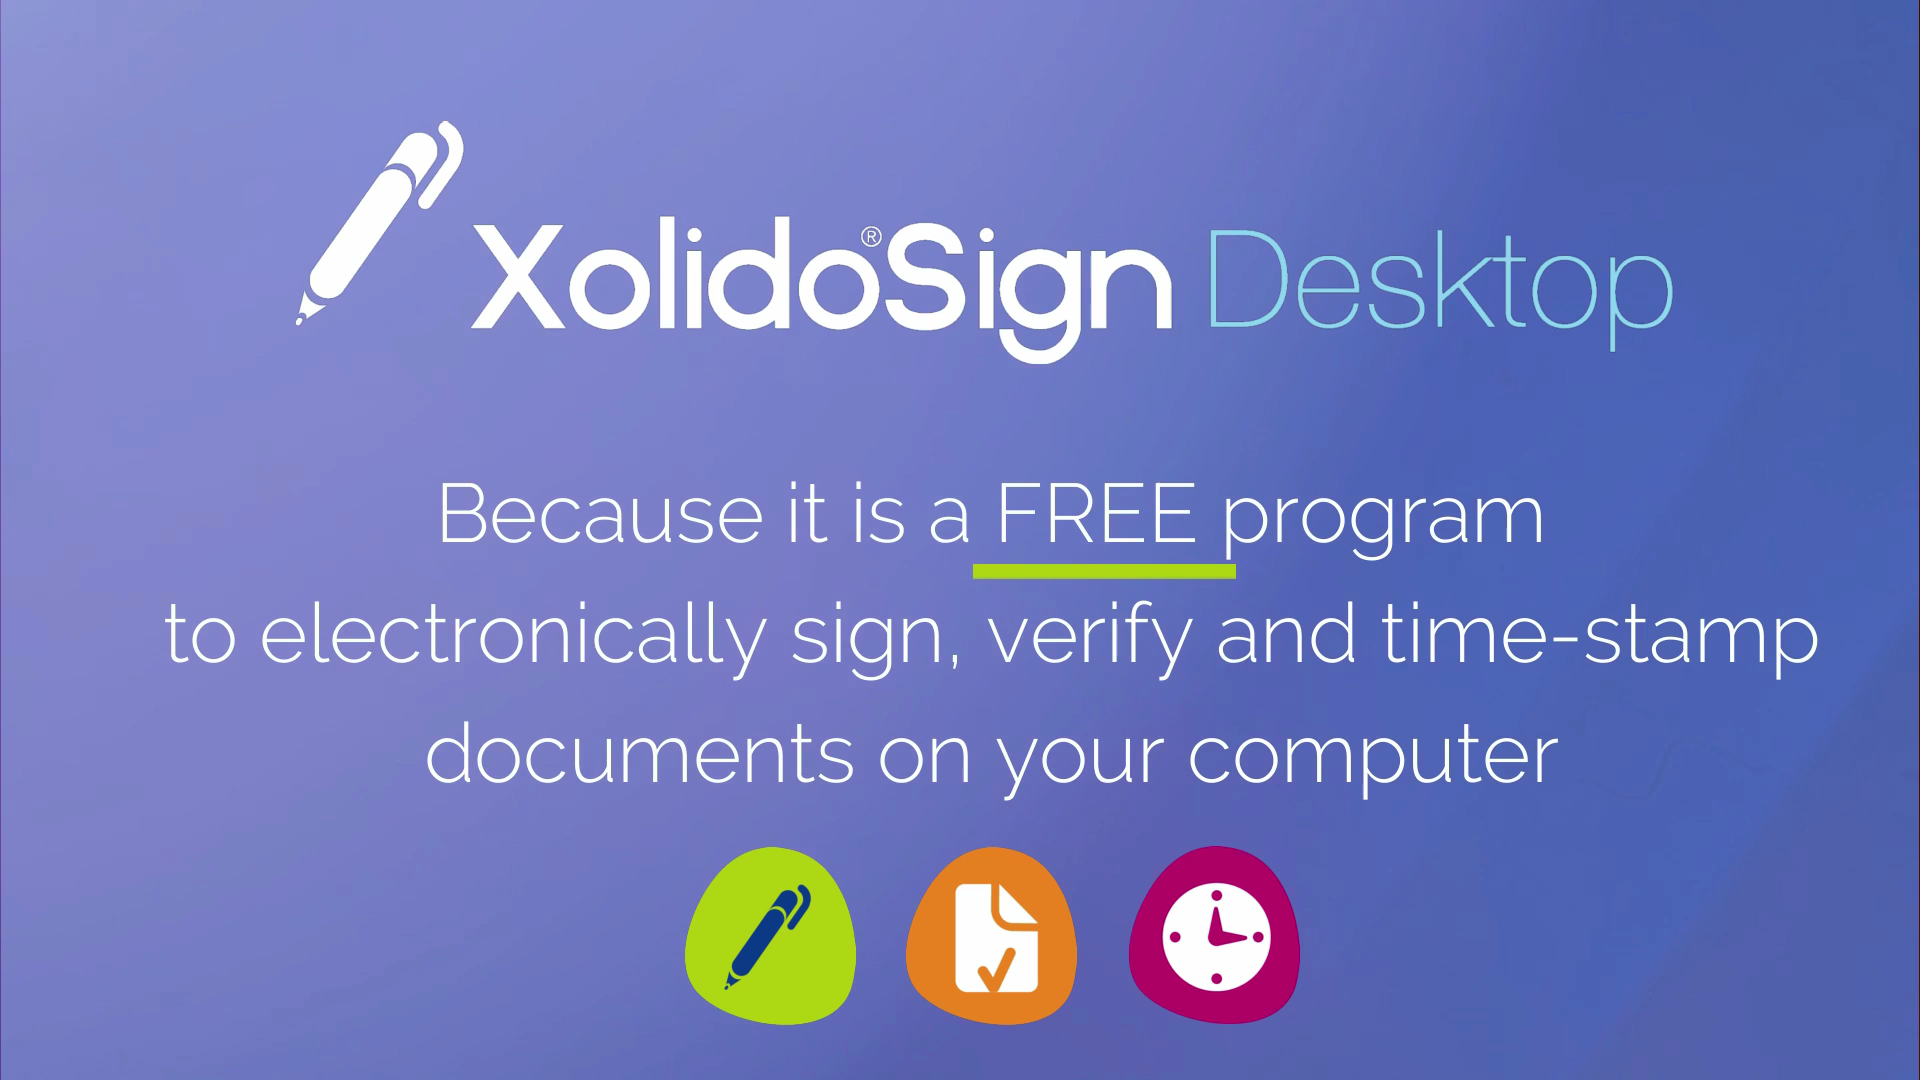 Why use XolidoSign Desktop?